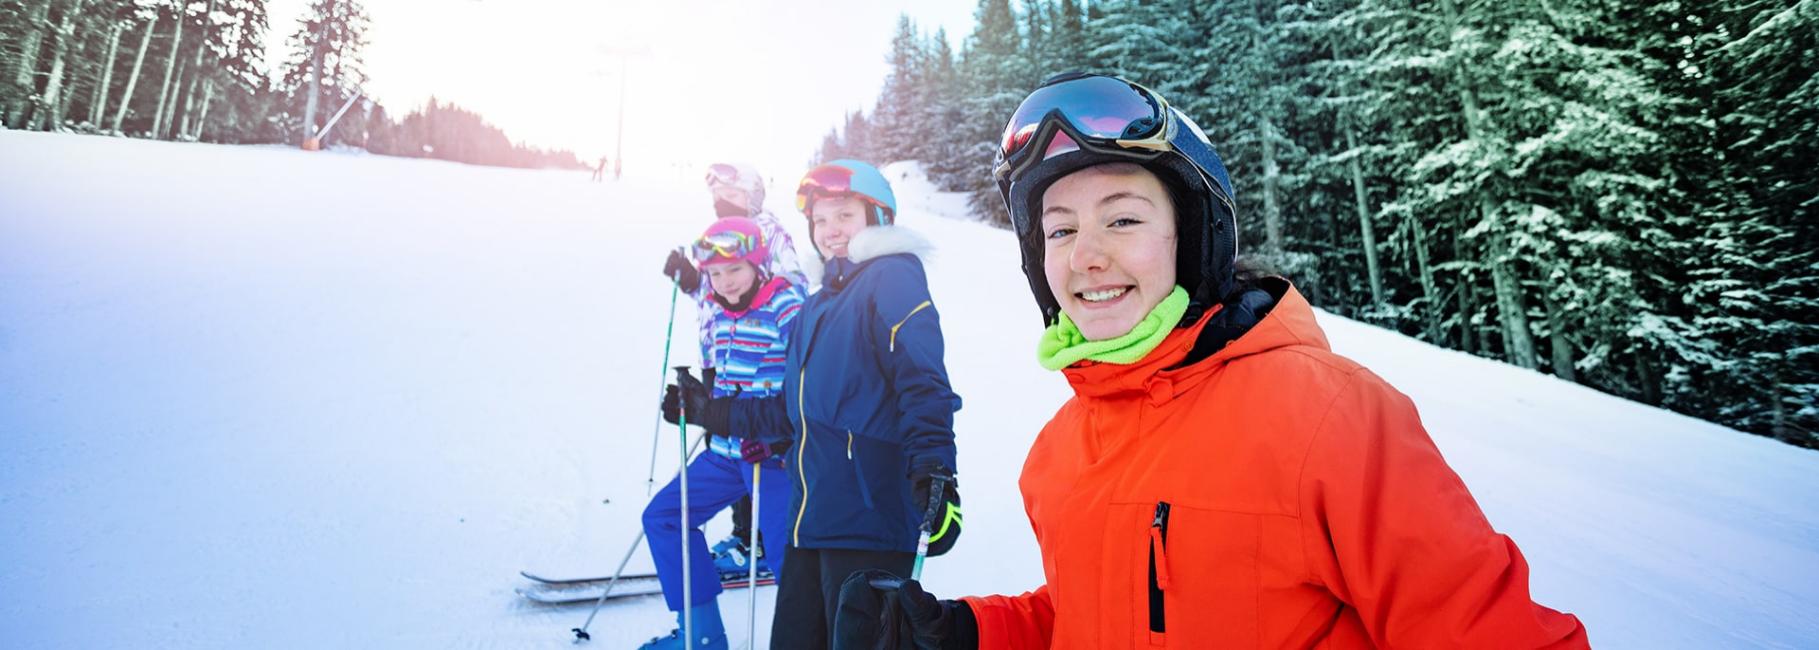 School Ski Trips to Austria